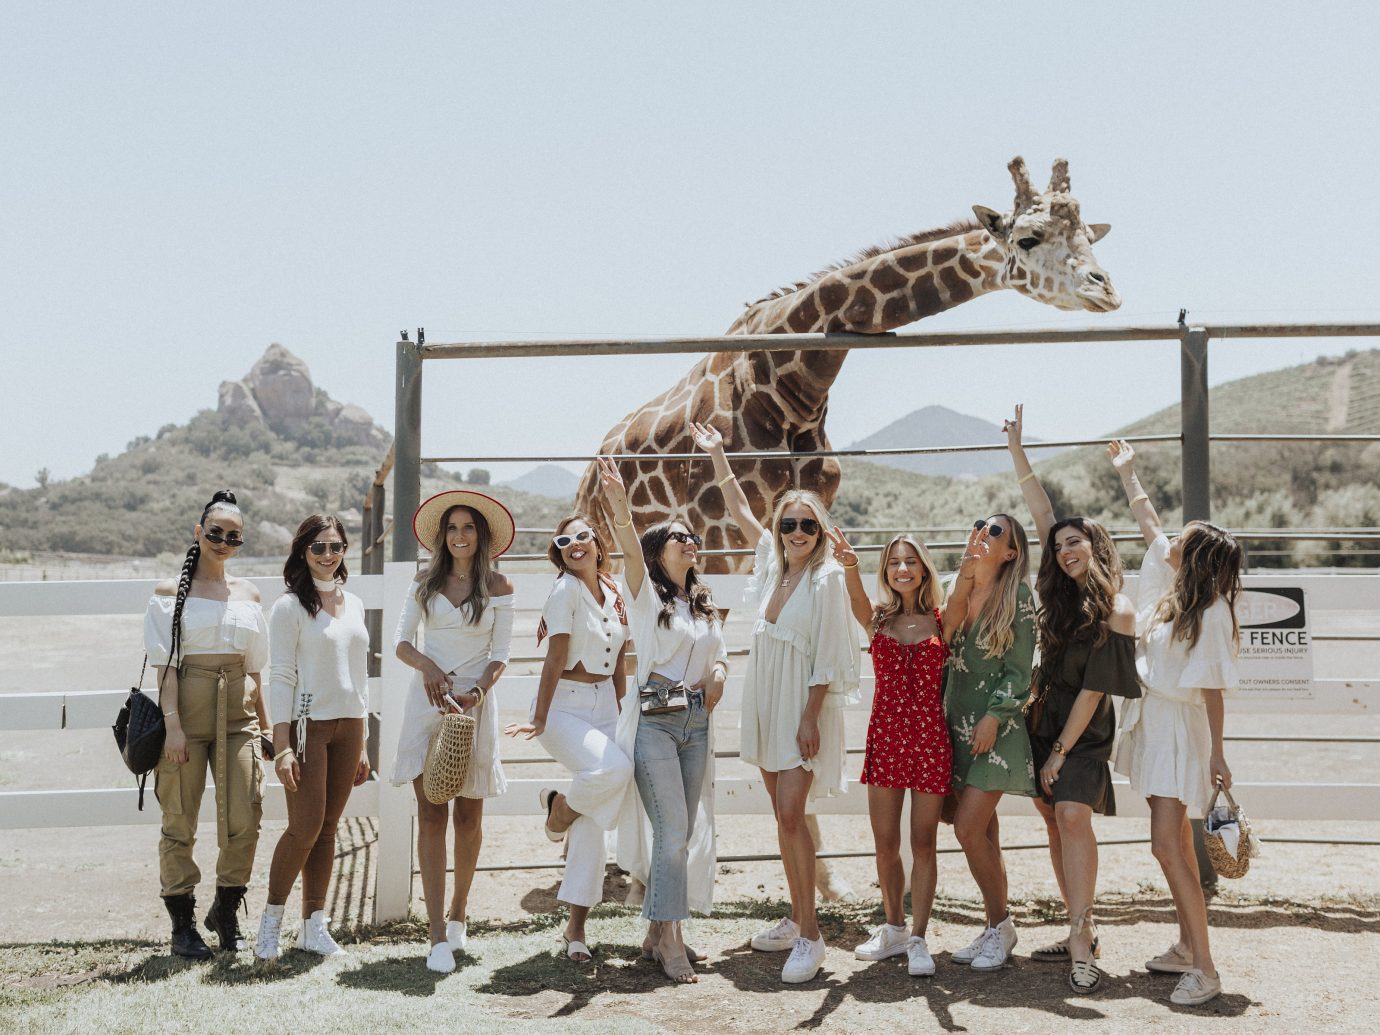 group of girls posing in front of giraffe